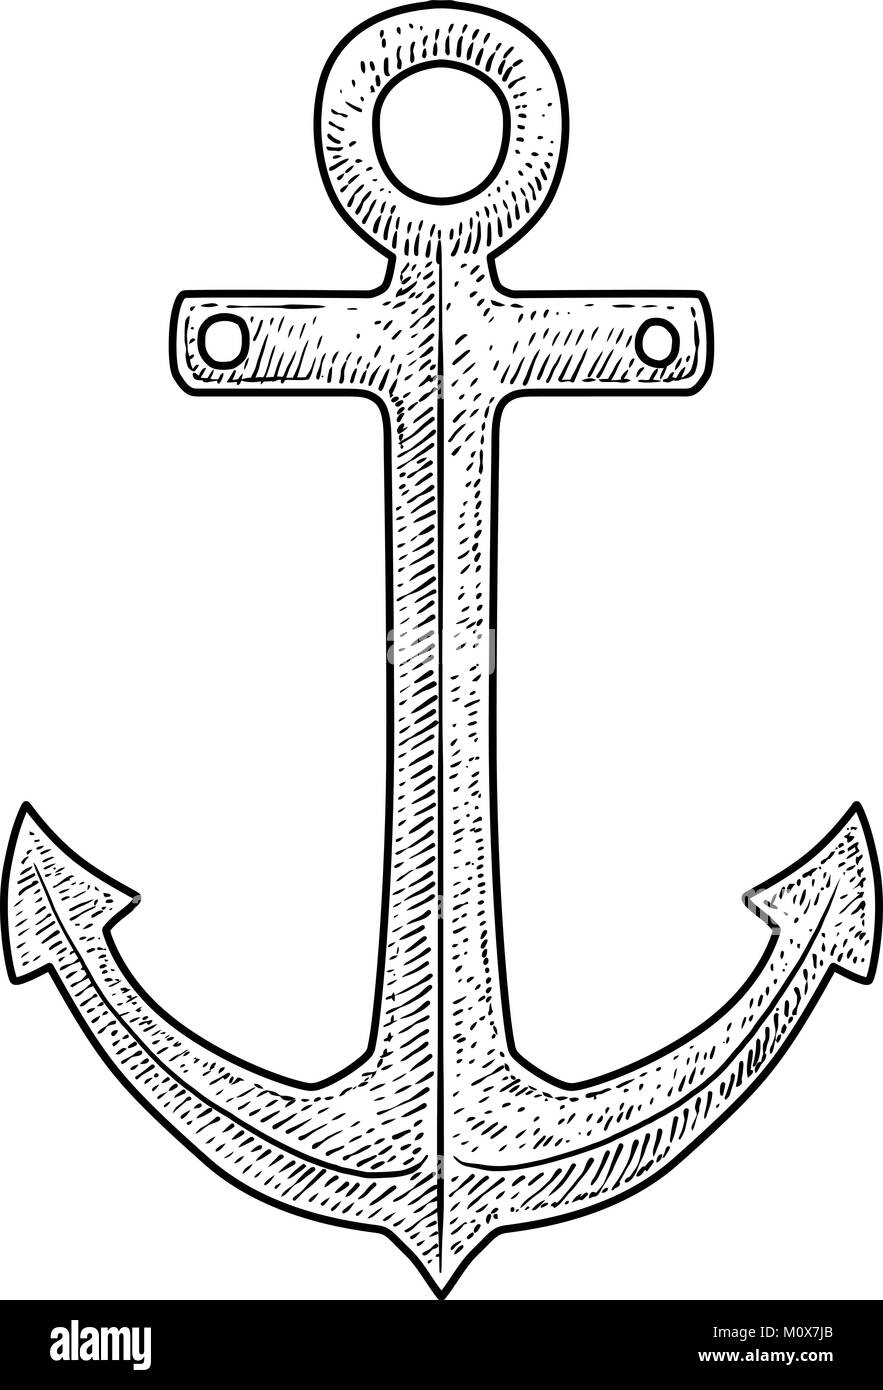 Anchor illustration, drawing, engraving, ink, line art, vector